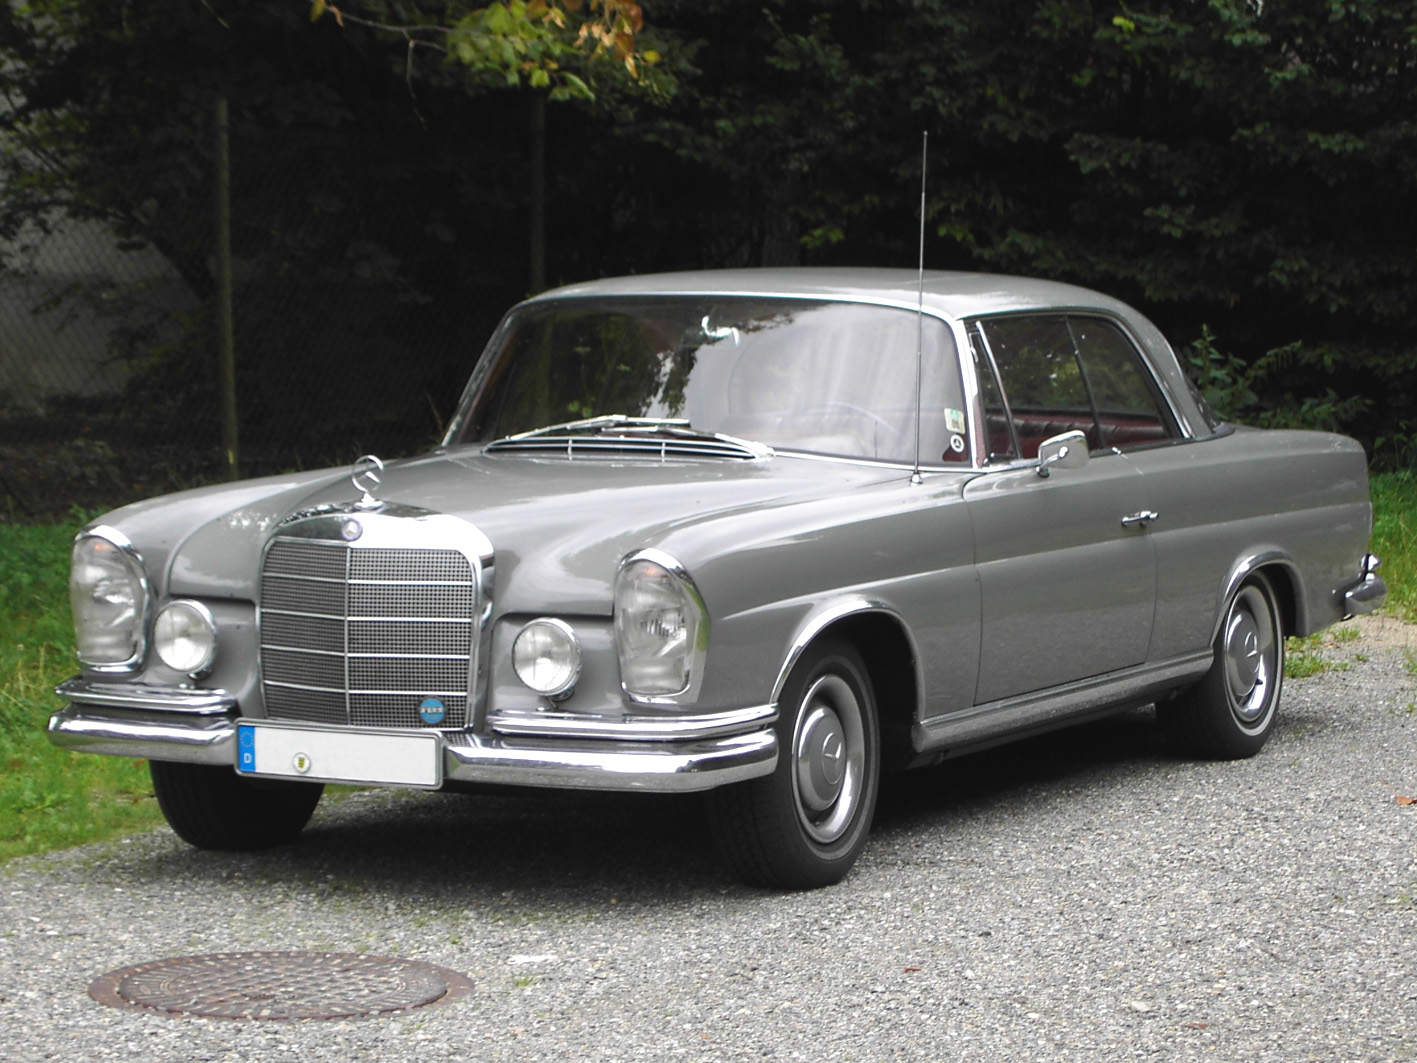 Mercedes-benz 280 se coupe (100 comments) Views 30726 Rating 6